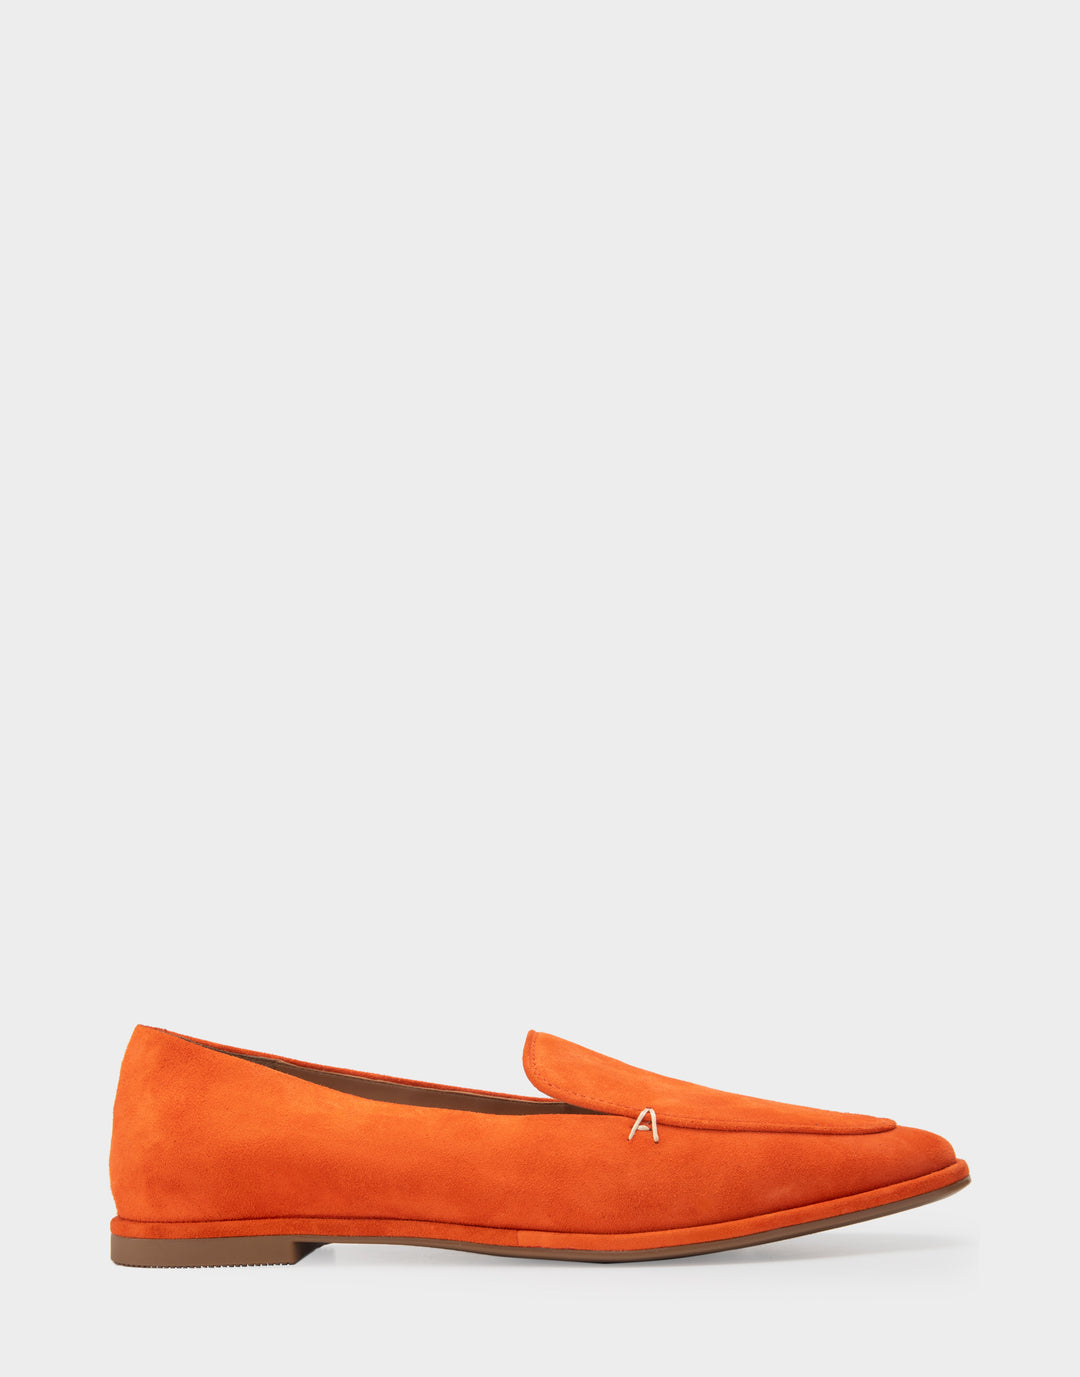 Neo - Comfortable Women’s Loafer In Orange